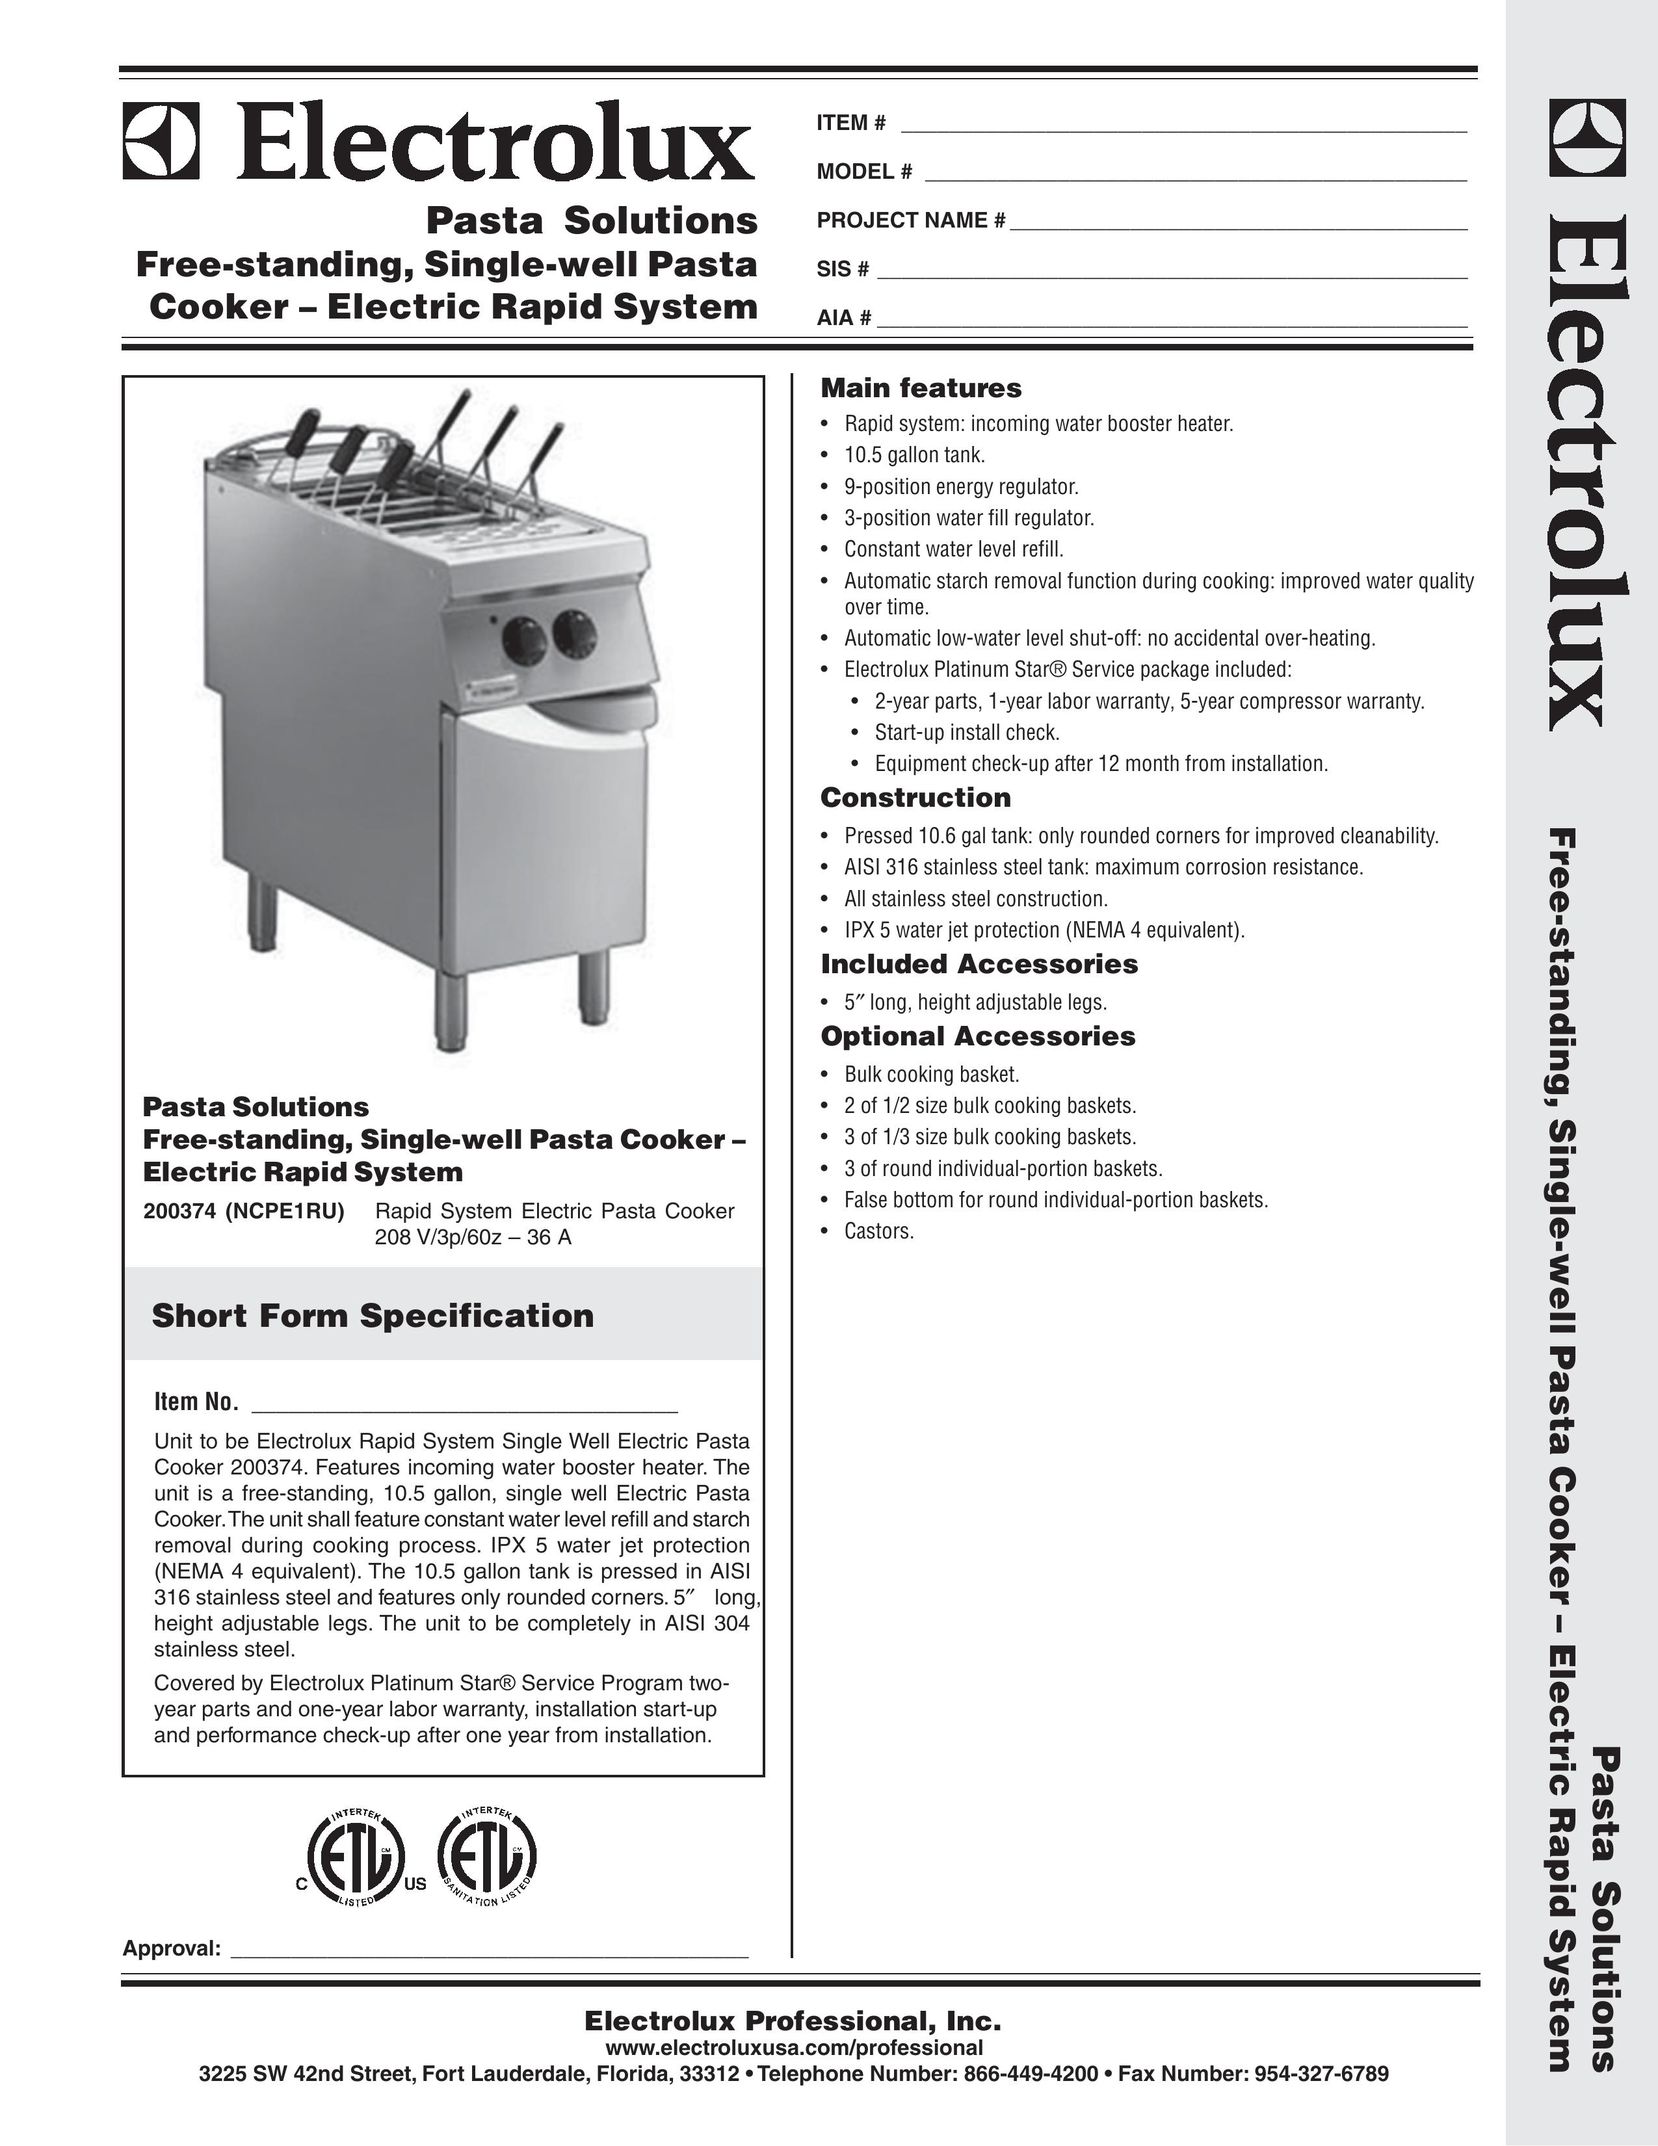 Electrolux NCPE1RU Pasta Maker User Manual